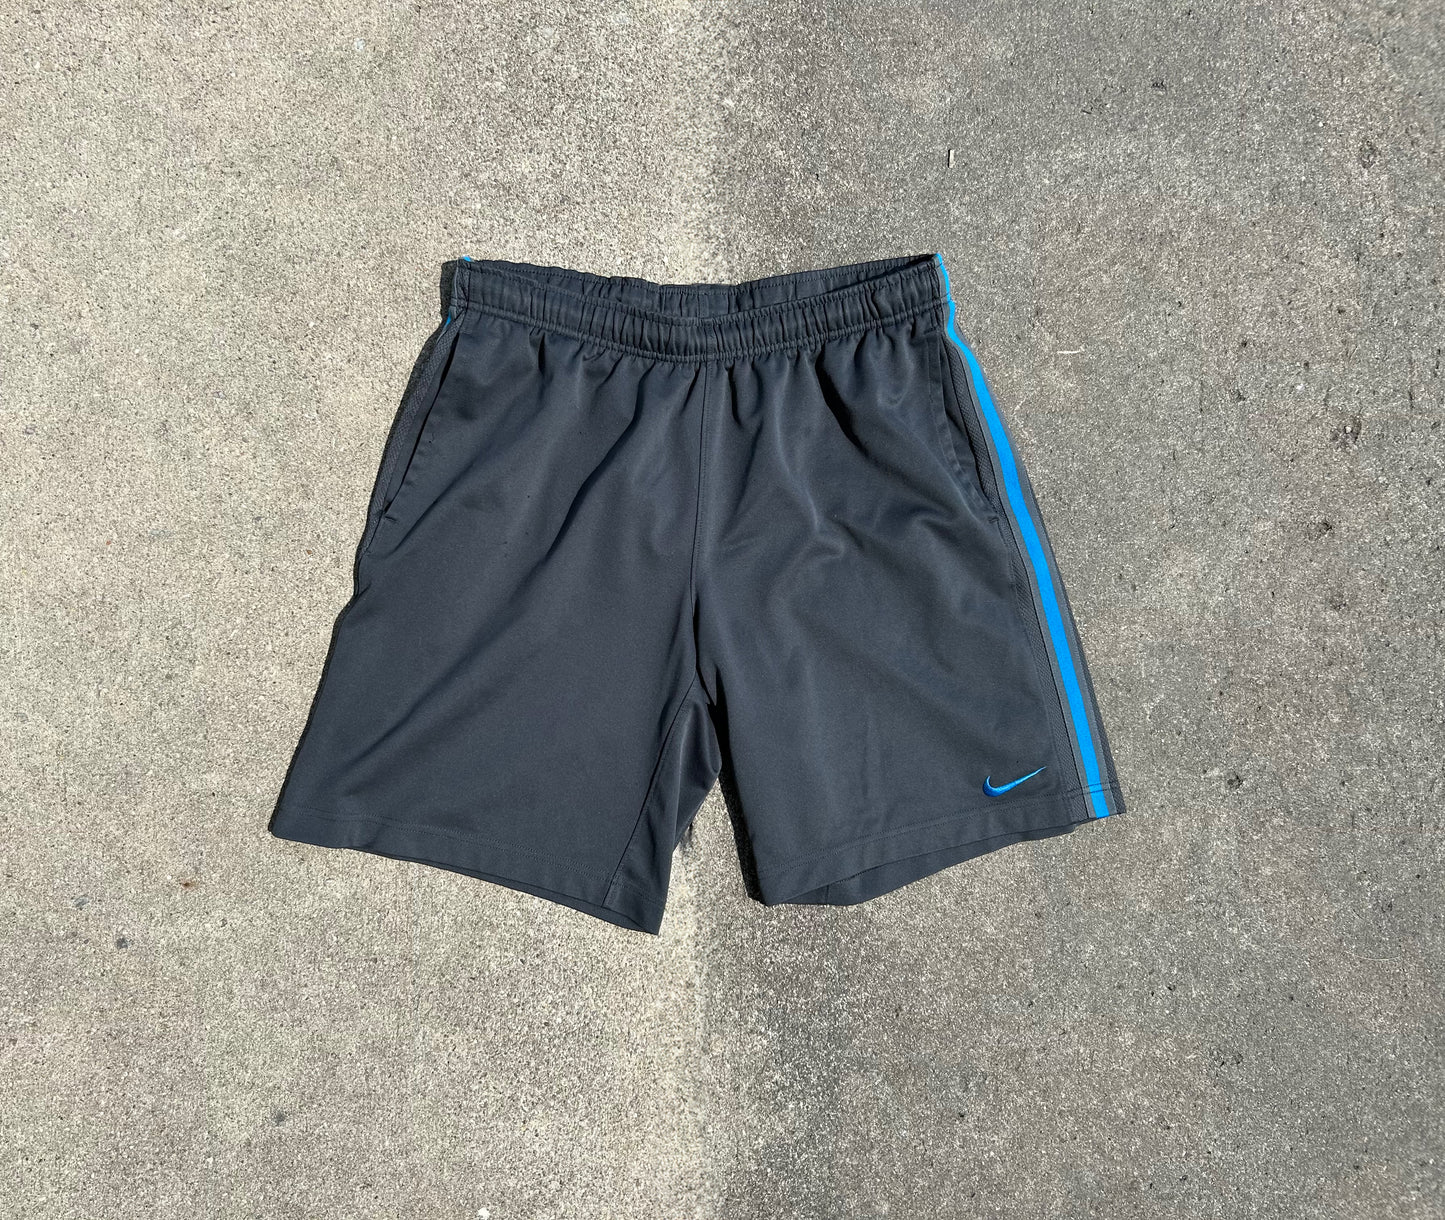 Blue & Gray Nike Shorts